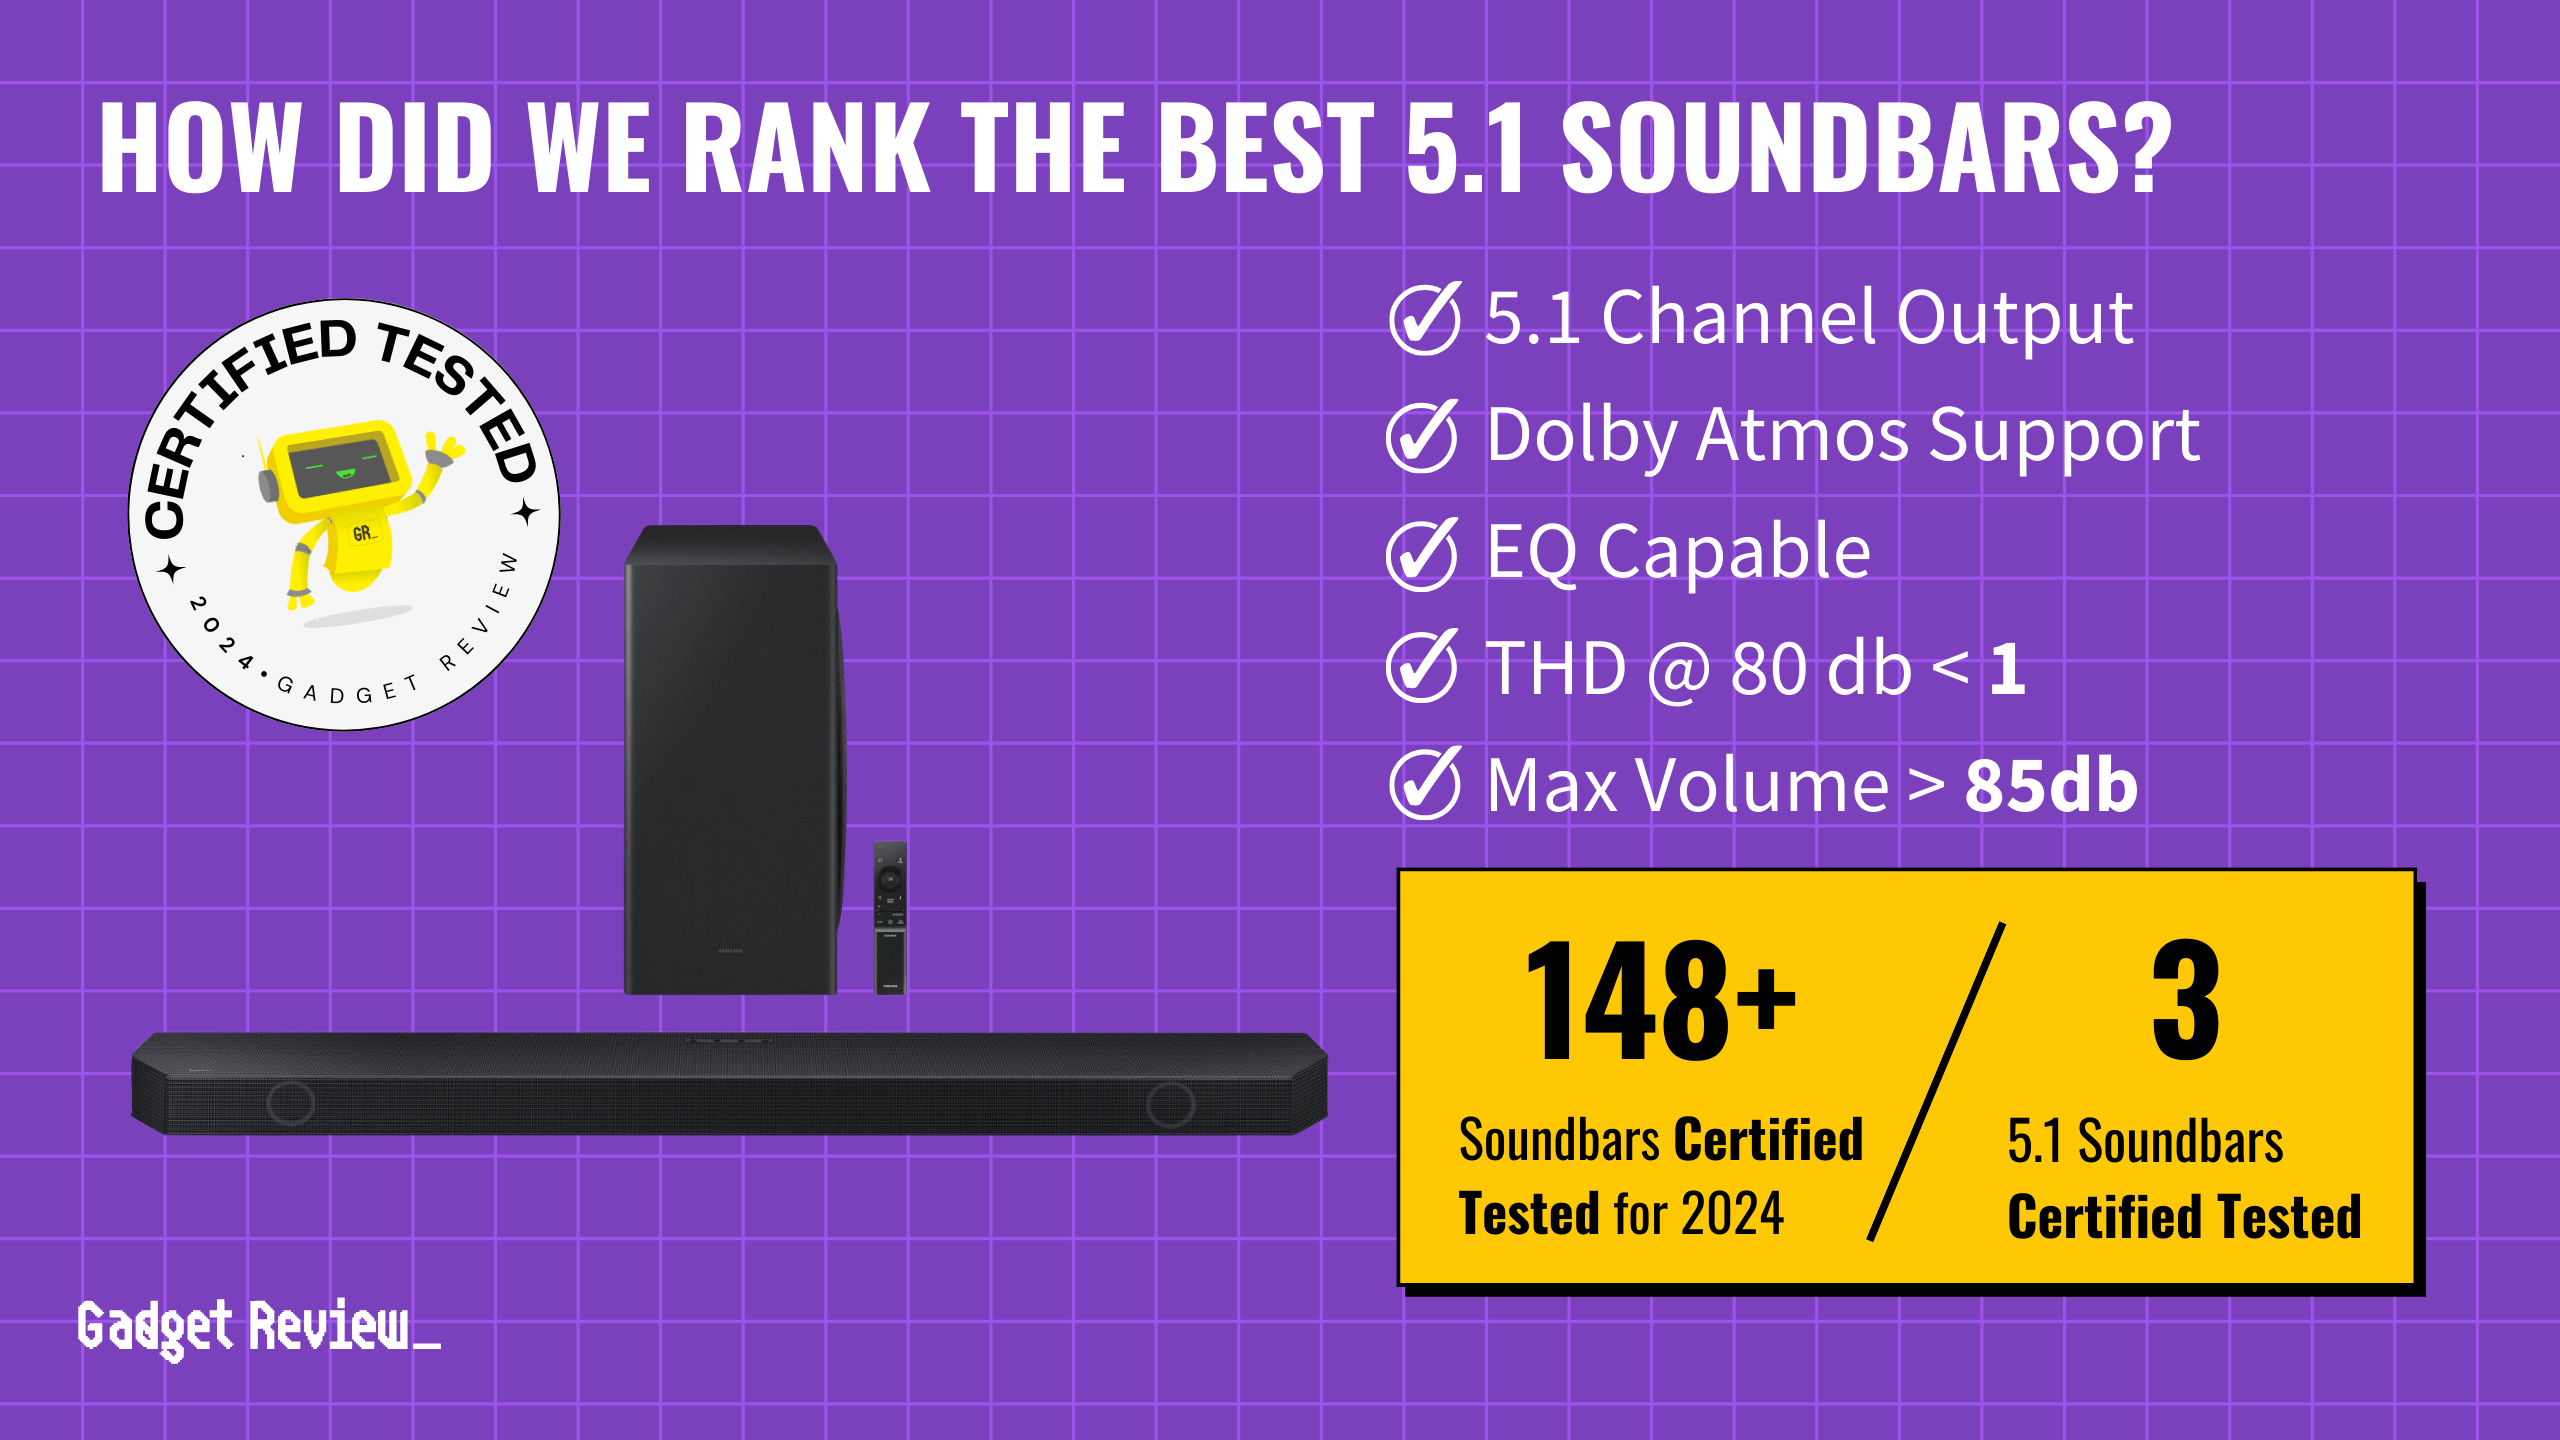 best 5.1 soundbar guide that shows the top best soundbar model